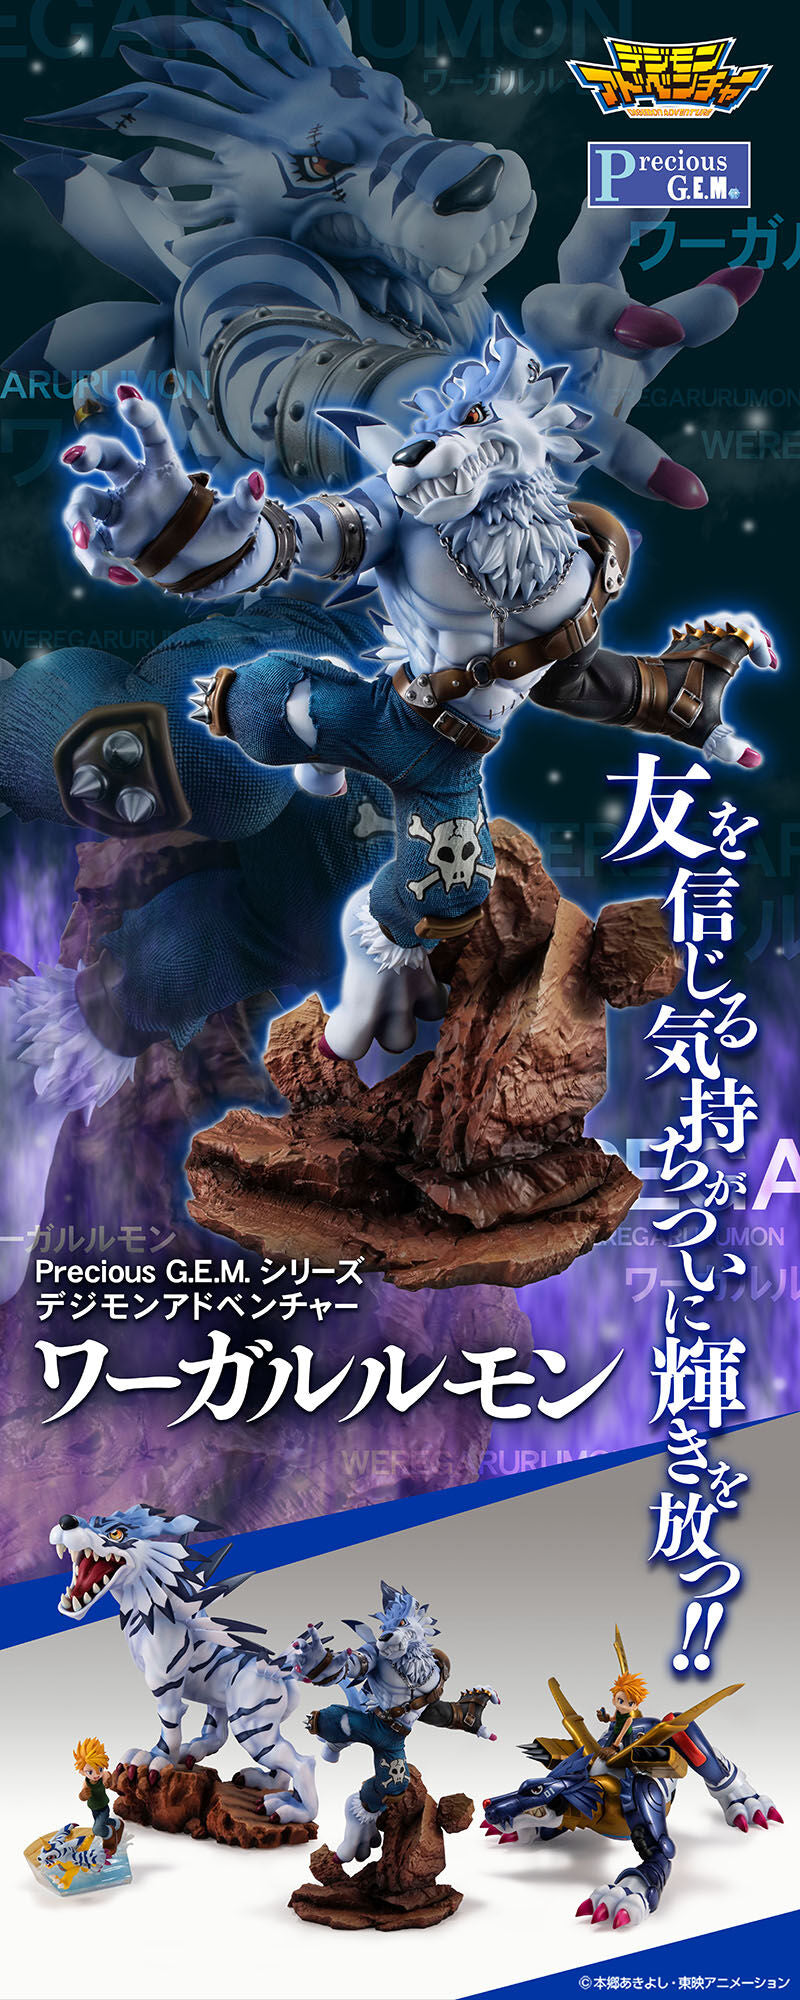 Precious G.E.M. Series Digimon Adventure Were Garurumon